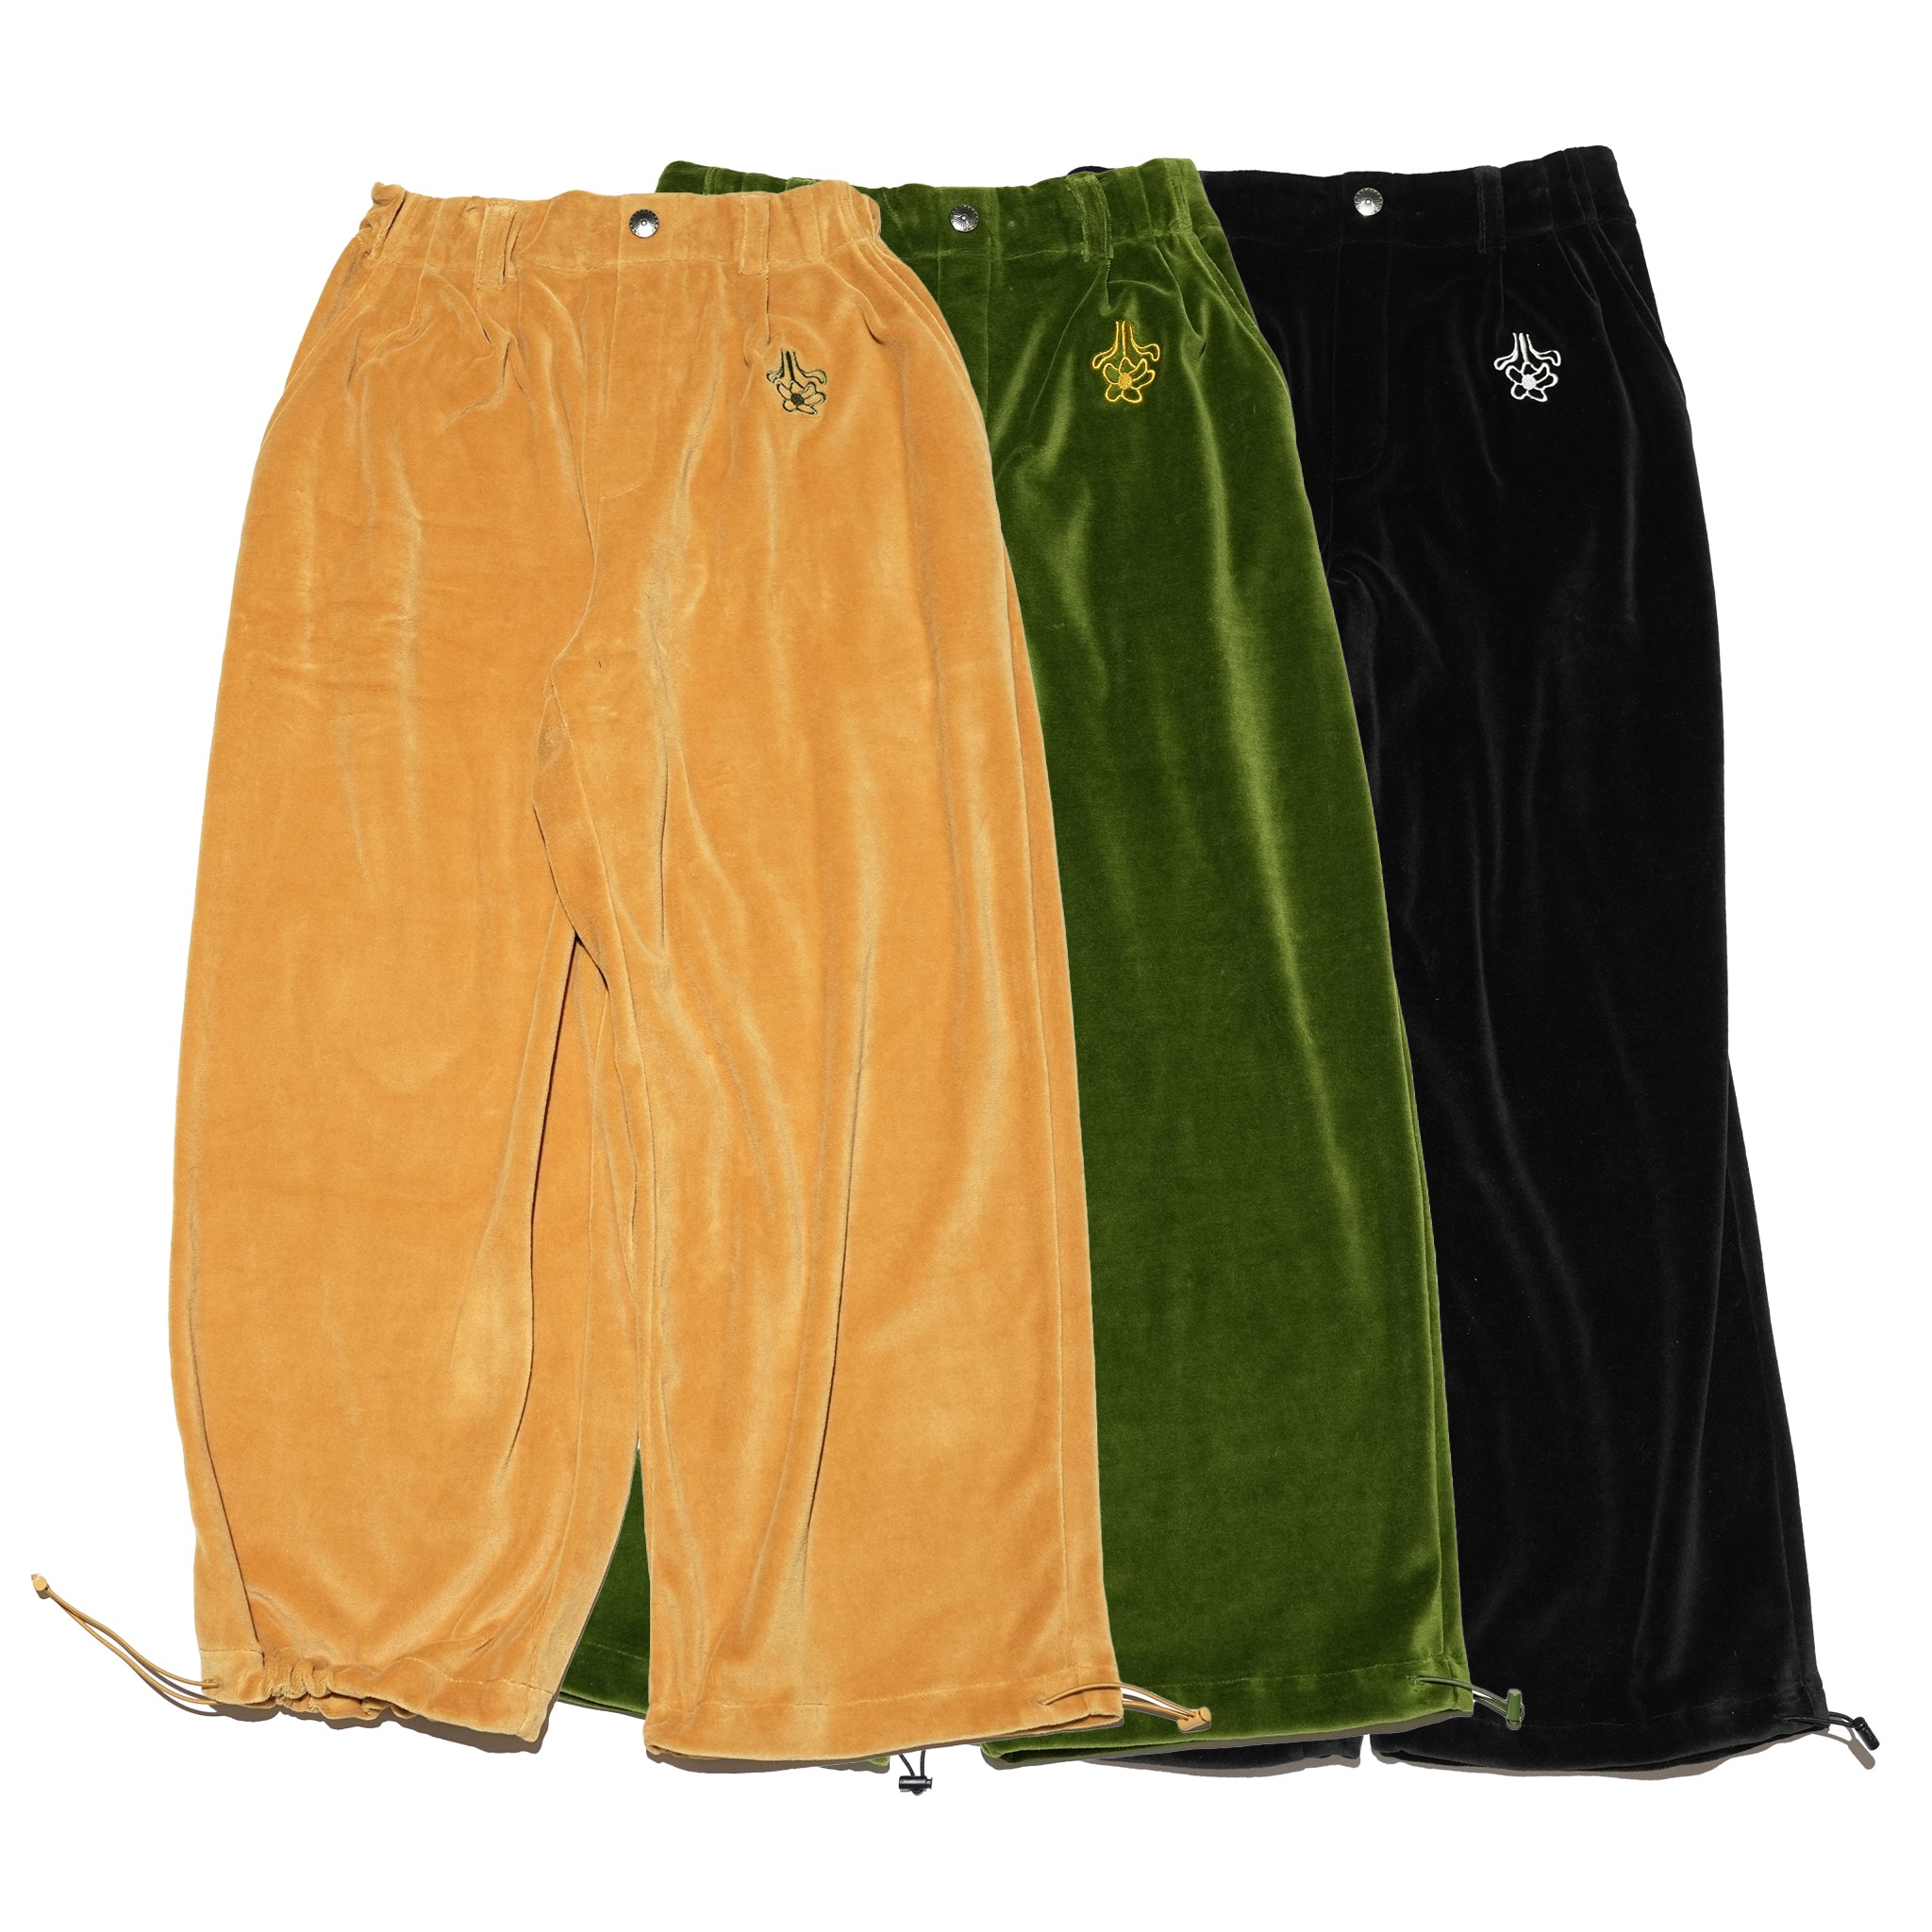 Name:Velor Pile Tapered Pants | Color:Marigold/Wakaba/Black【AMBERGLEAM_アンバーグリーム】| No:1181141312